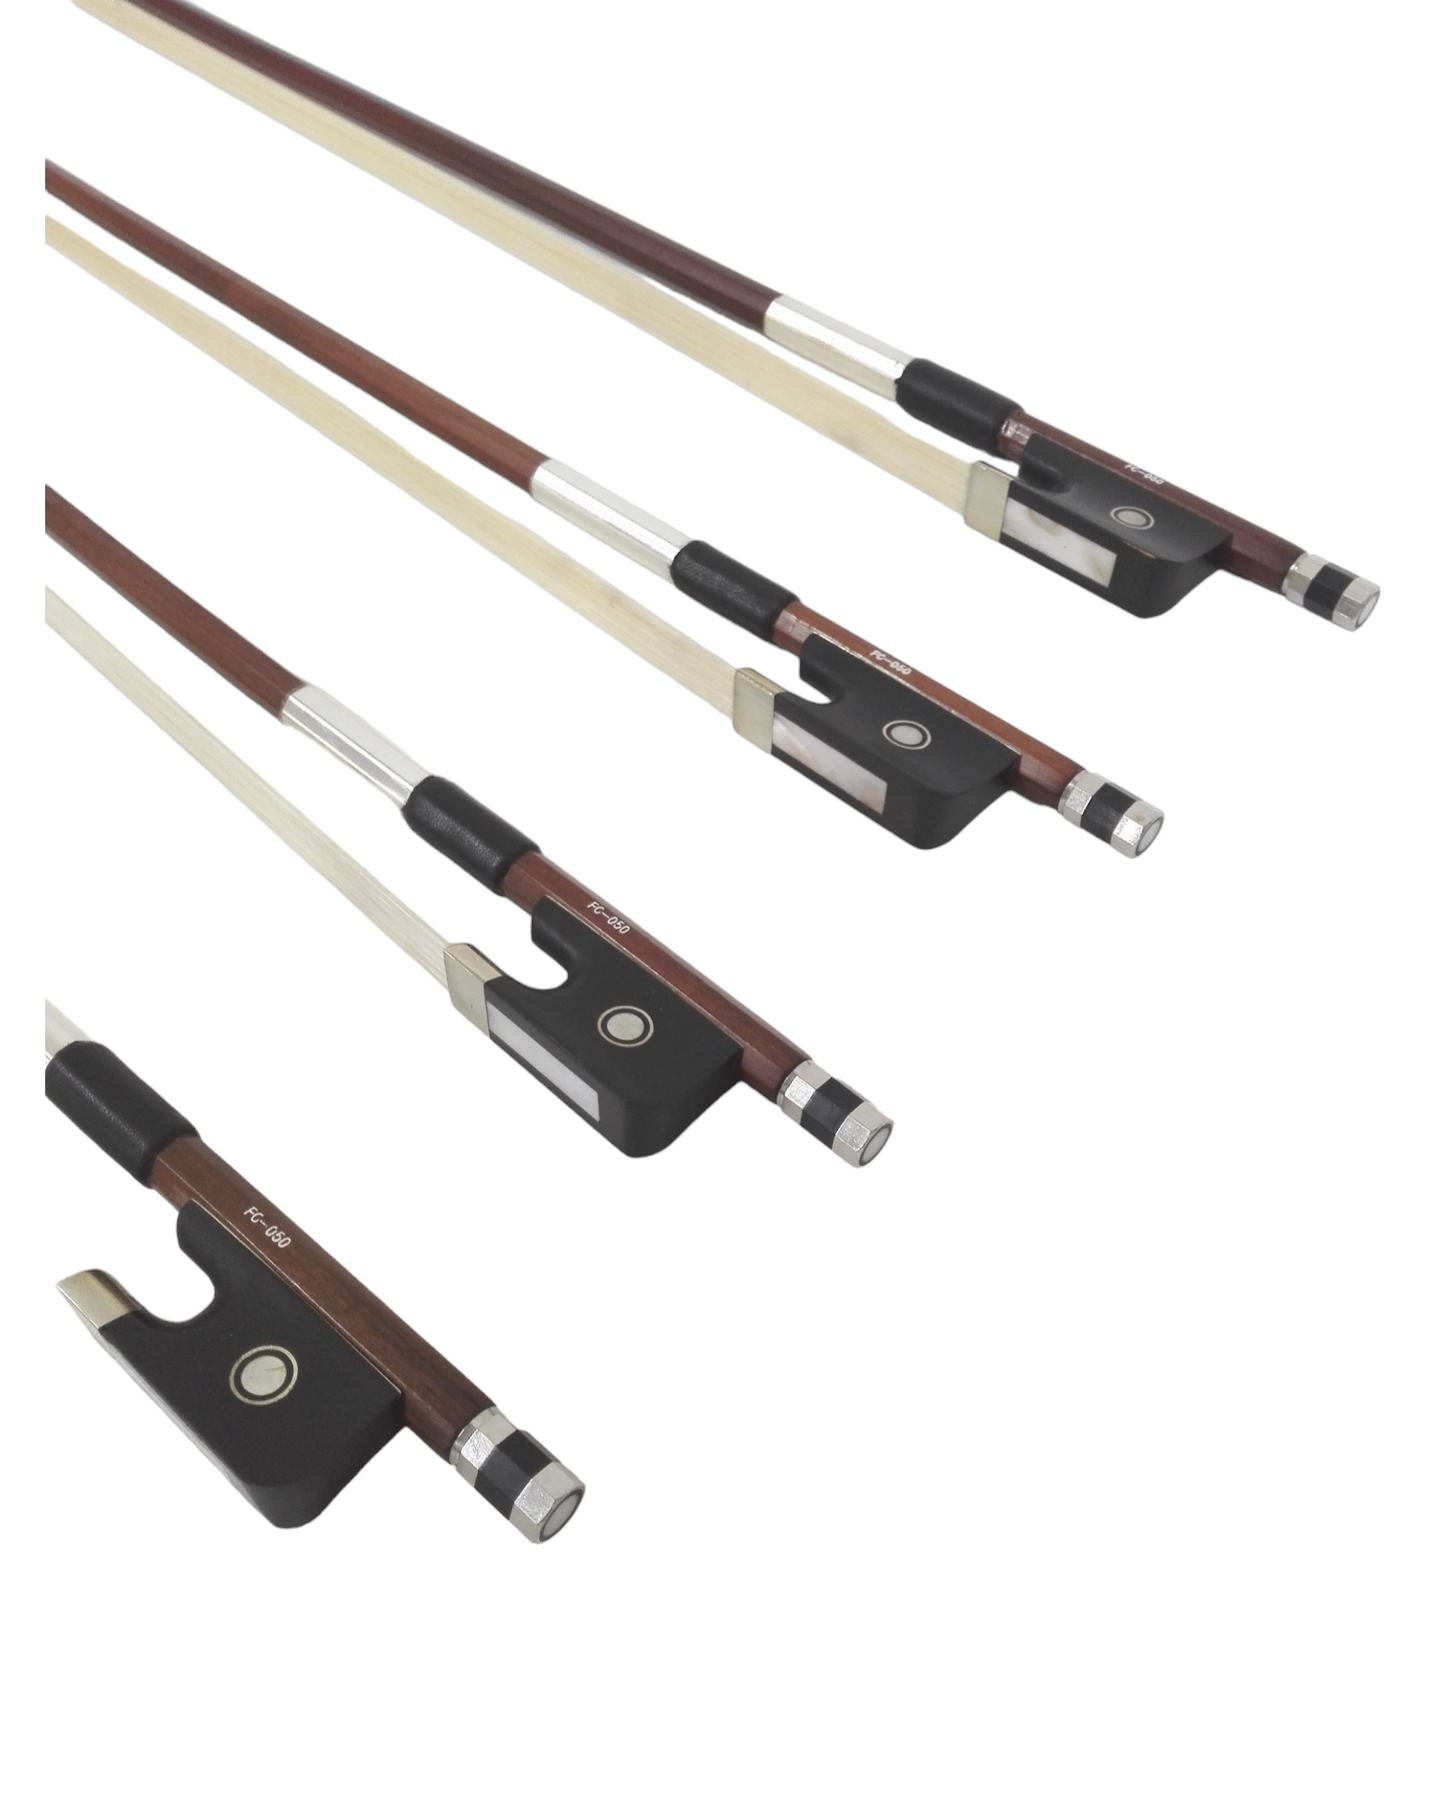 Symphony FC050 1/2 Size Cello Bow, Brazil-wood, Octagonal Stick, Real Horse Hair